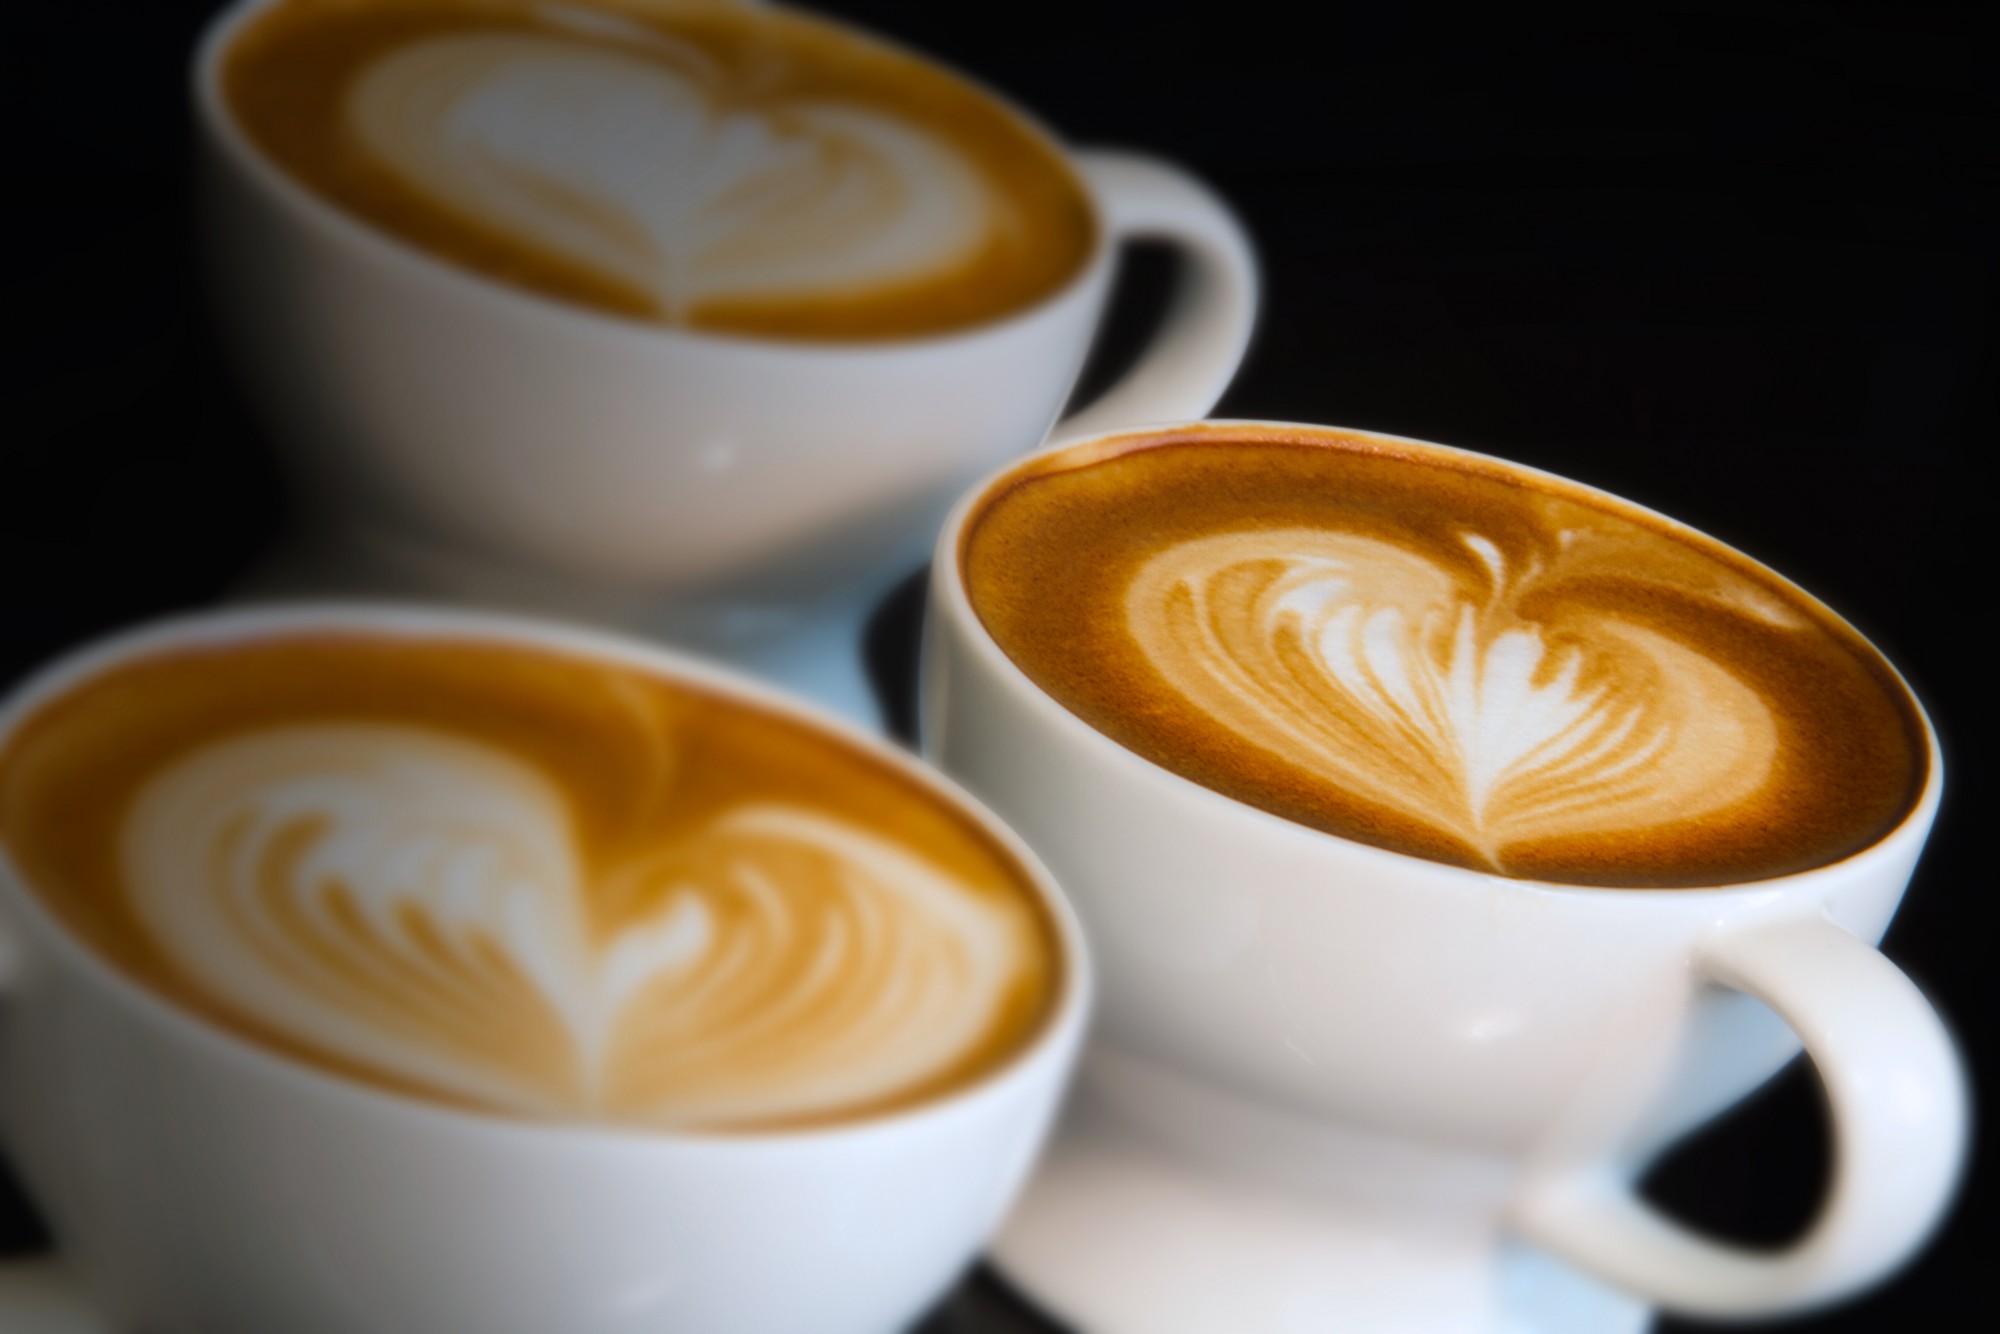 Starbucks, Match.com hope love brews at ‘world’s largest’ coffee date